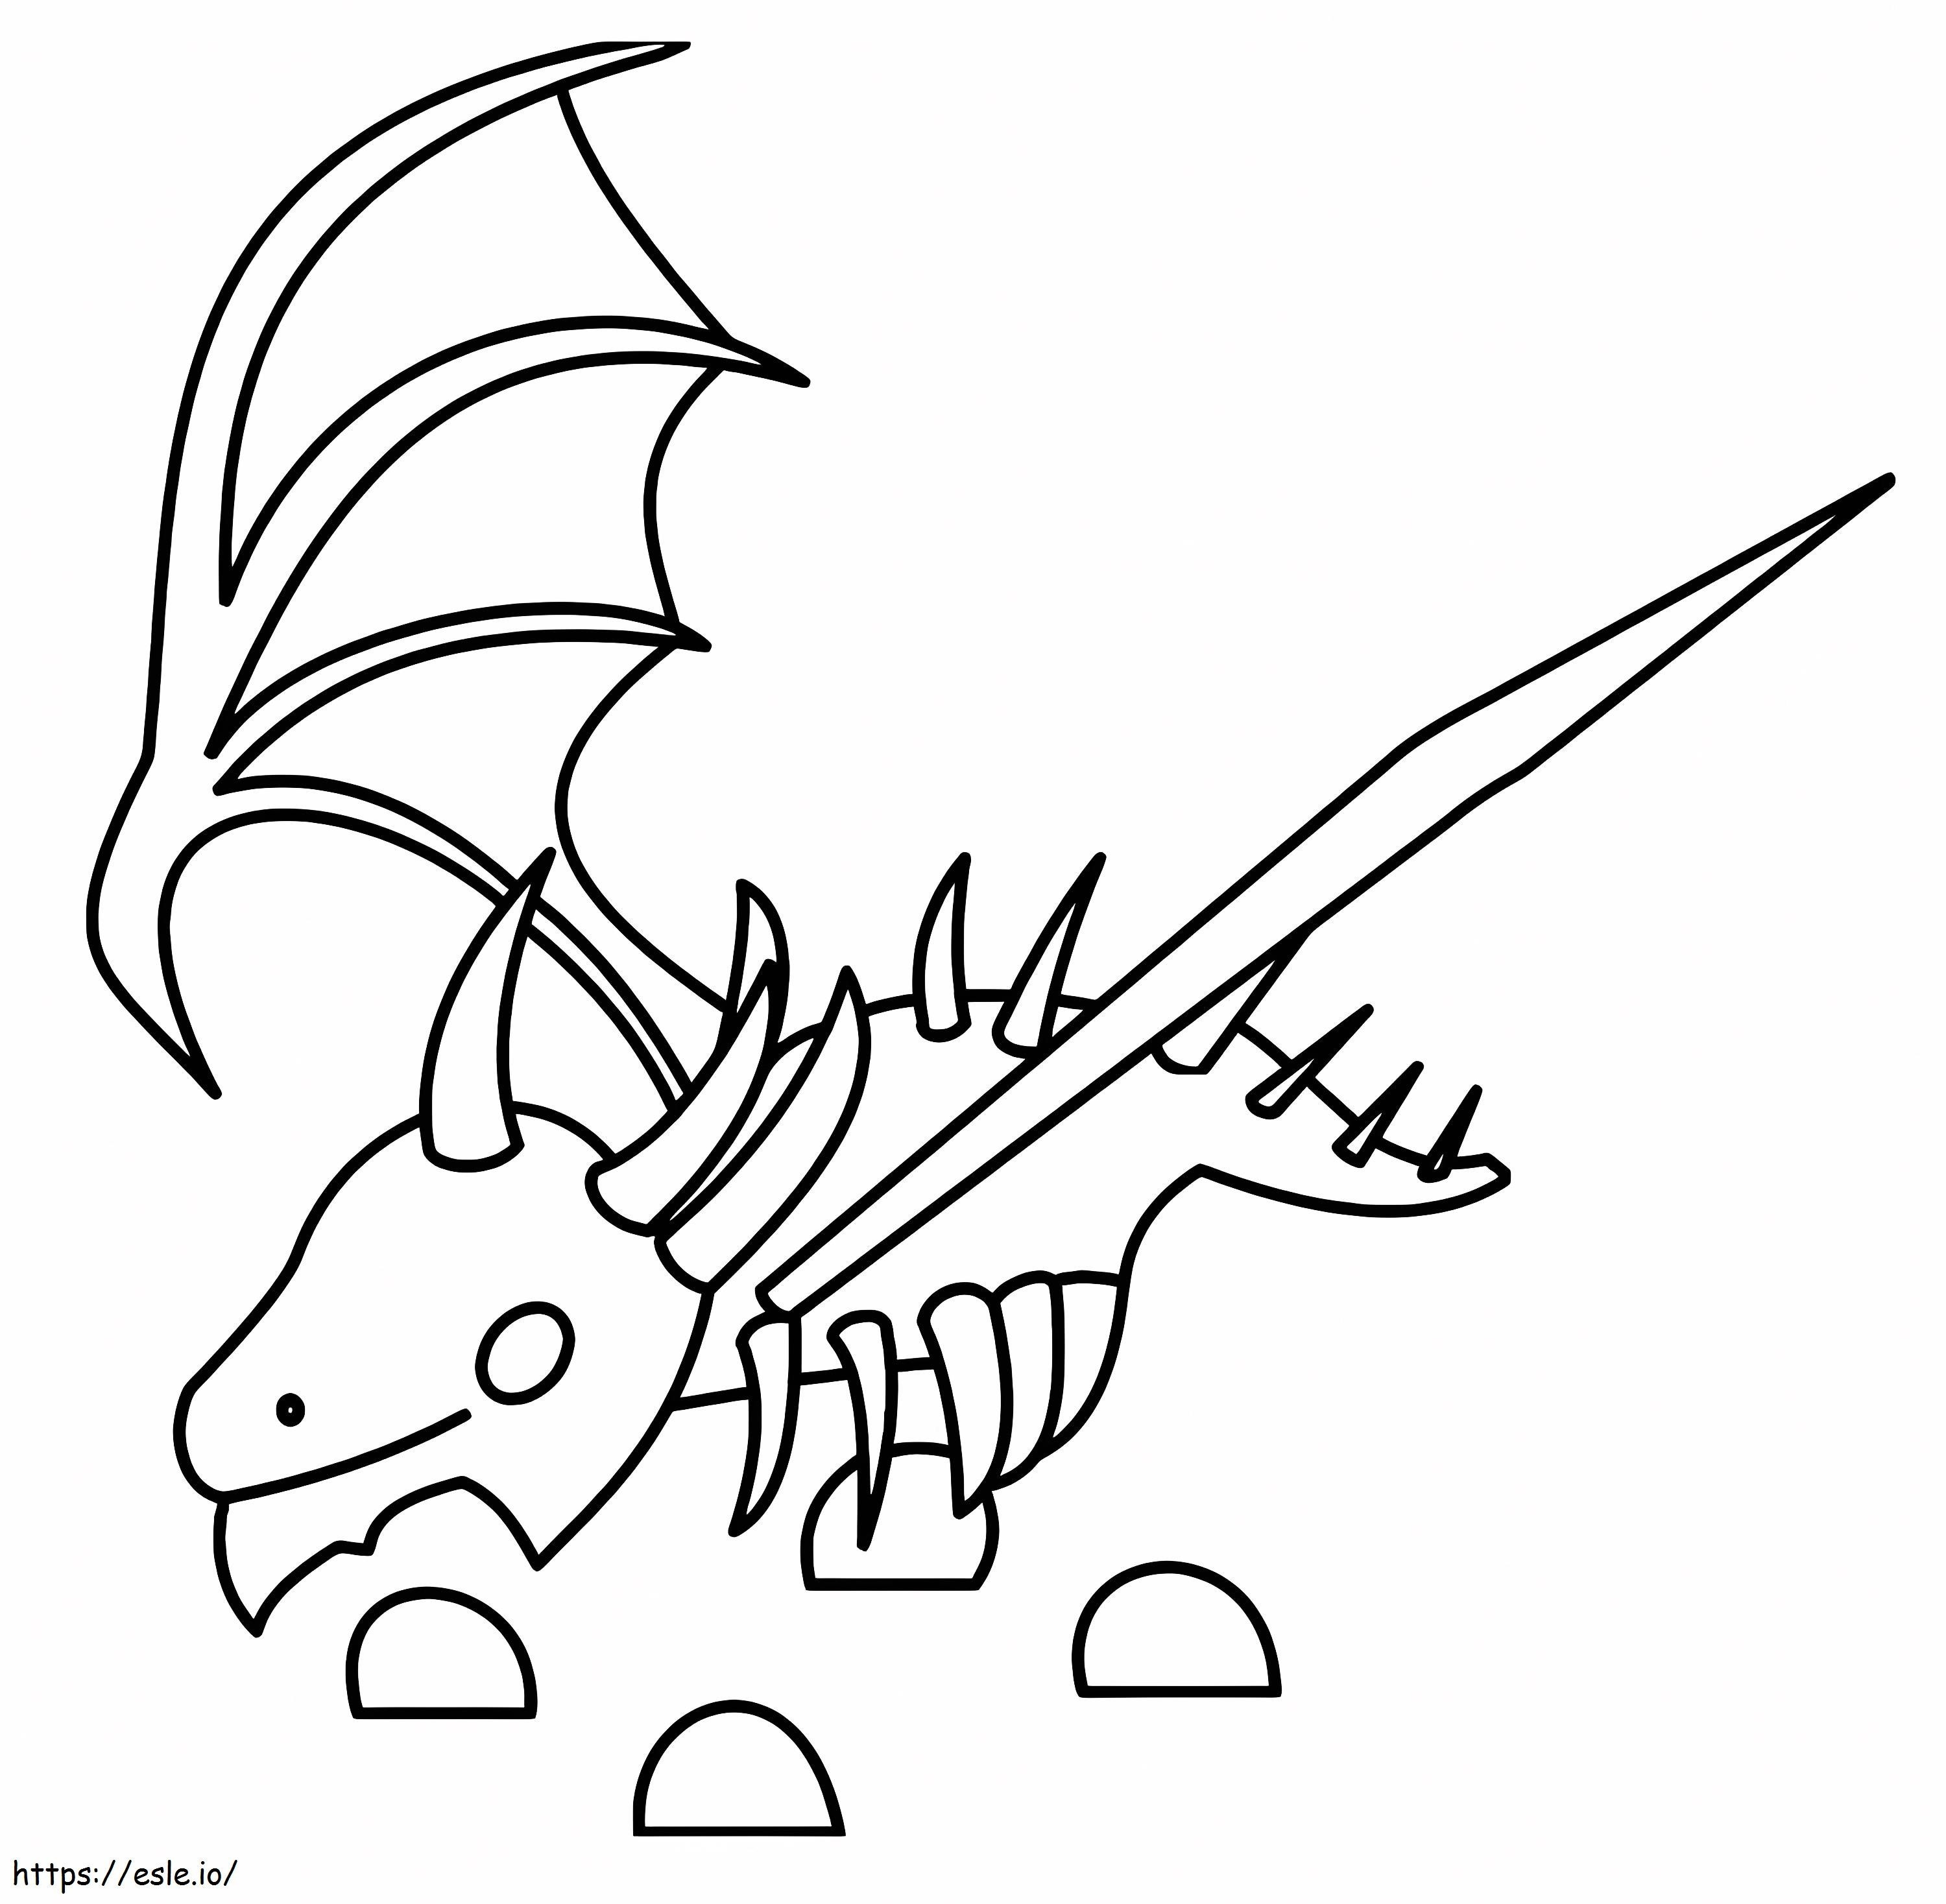 Shadow Dragon Adopt Me coloring page